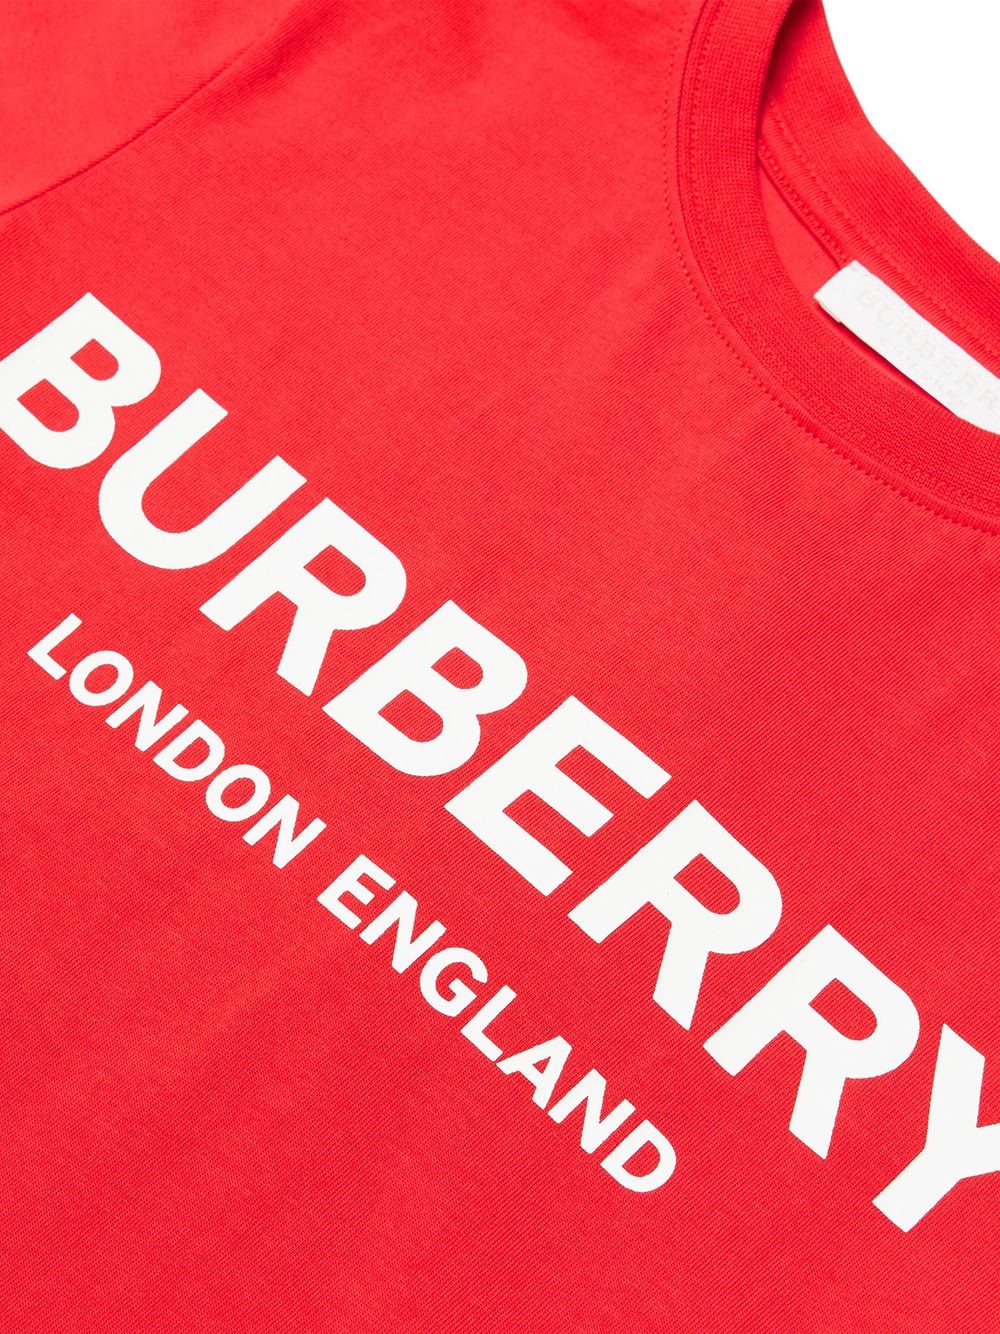 burberry robbie t shirt